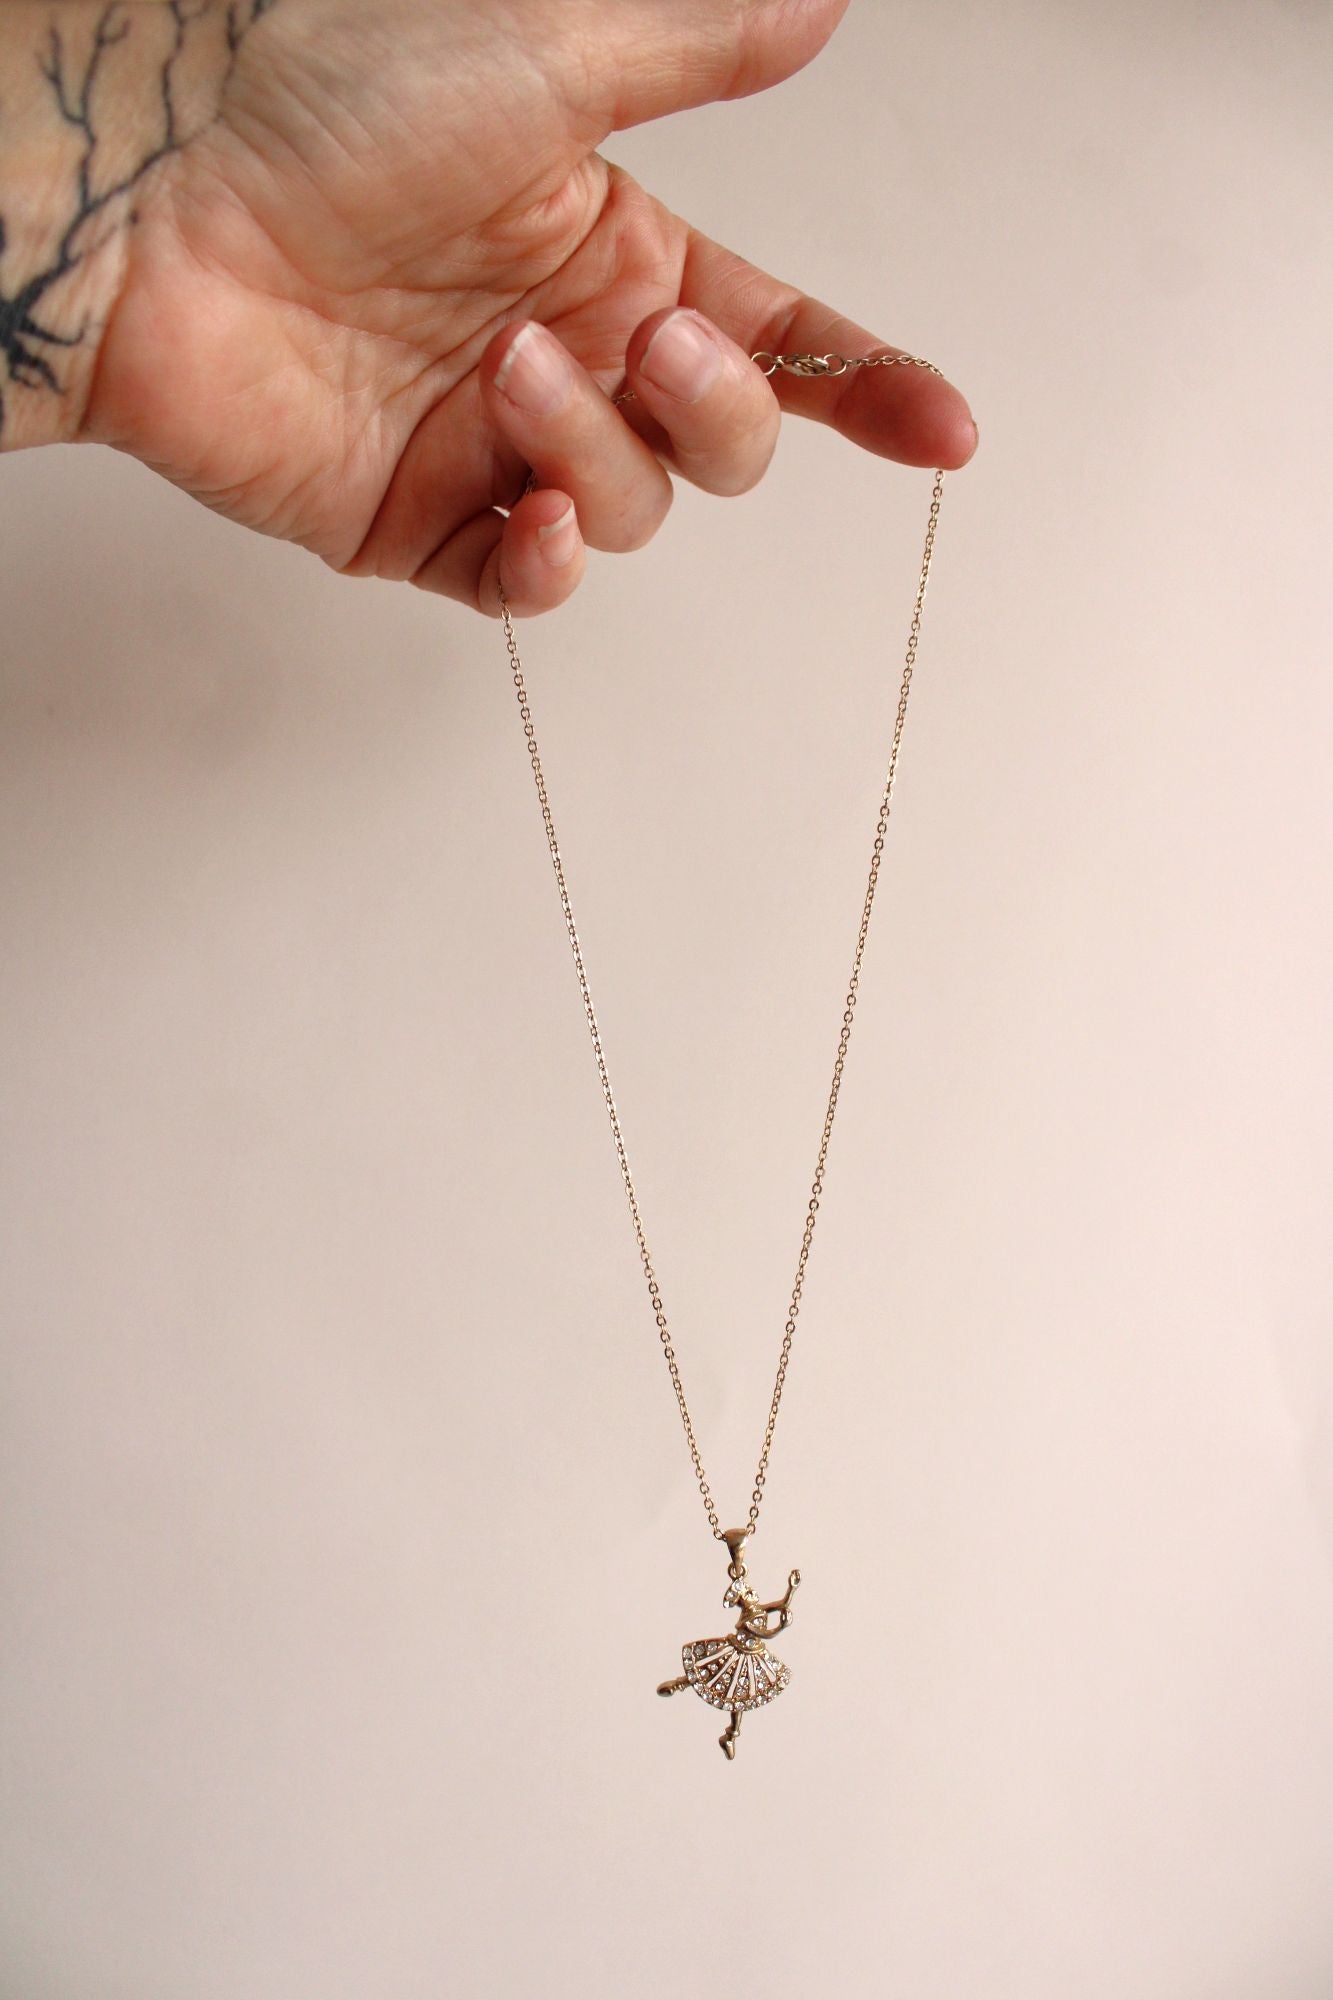 Ballerina Necklace, gold tone chain, gold and rhinestone